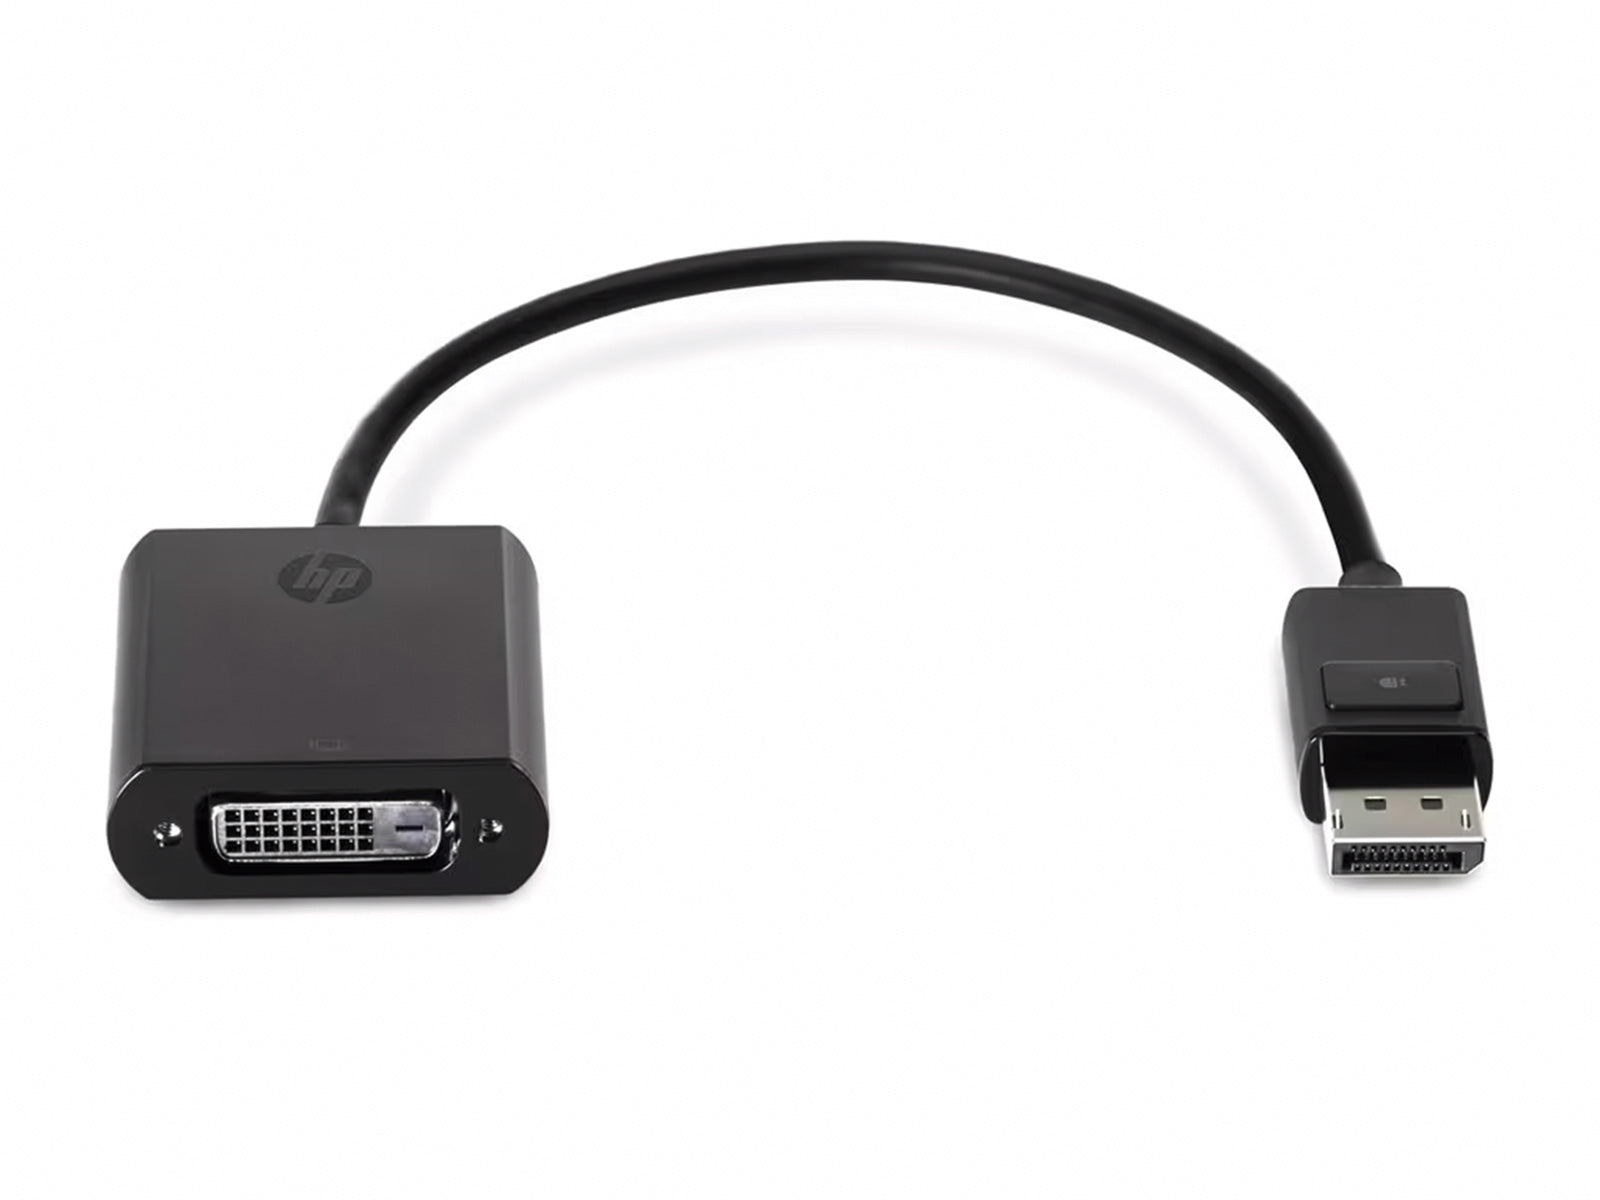 HP DisplayPort to DVI Single-Link Video Signal Adapter Converter (752660-001)